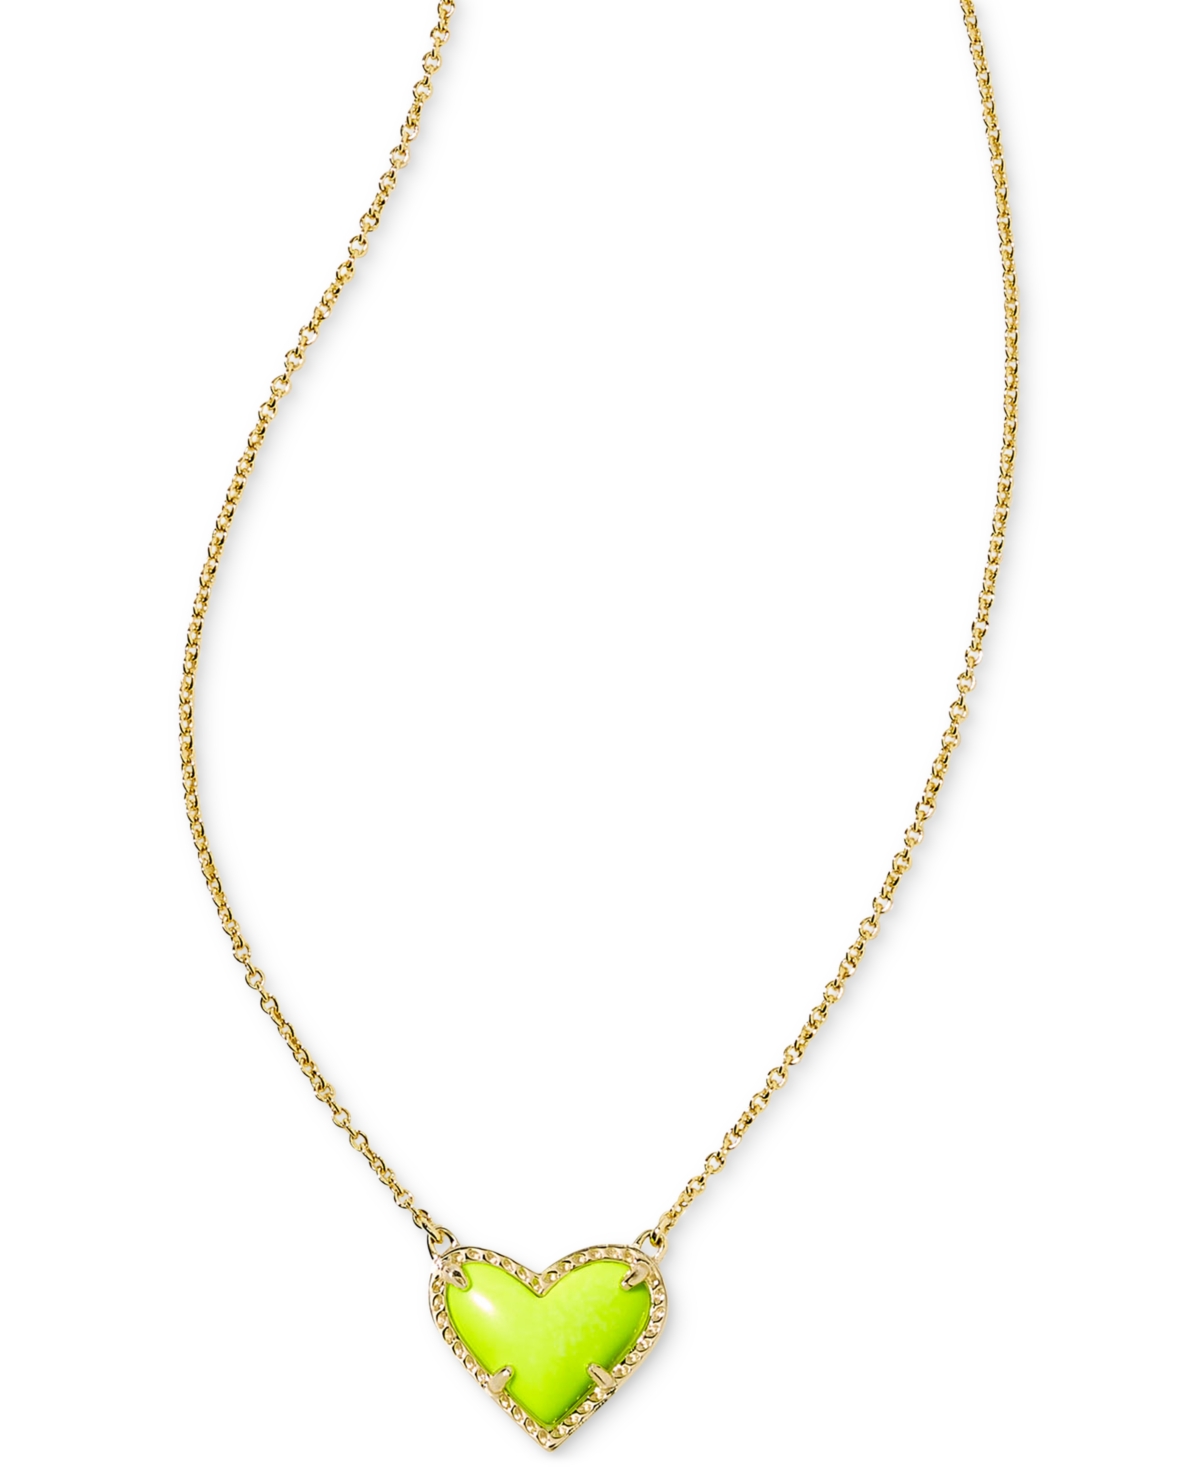 Kendra Scott 14k Gold Plated And Genuine Stone  Ari Heart Pendant Necklace In Neon Yello